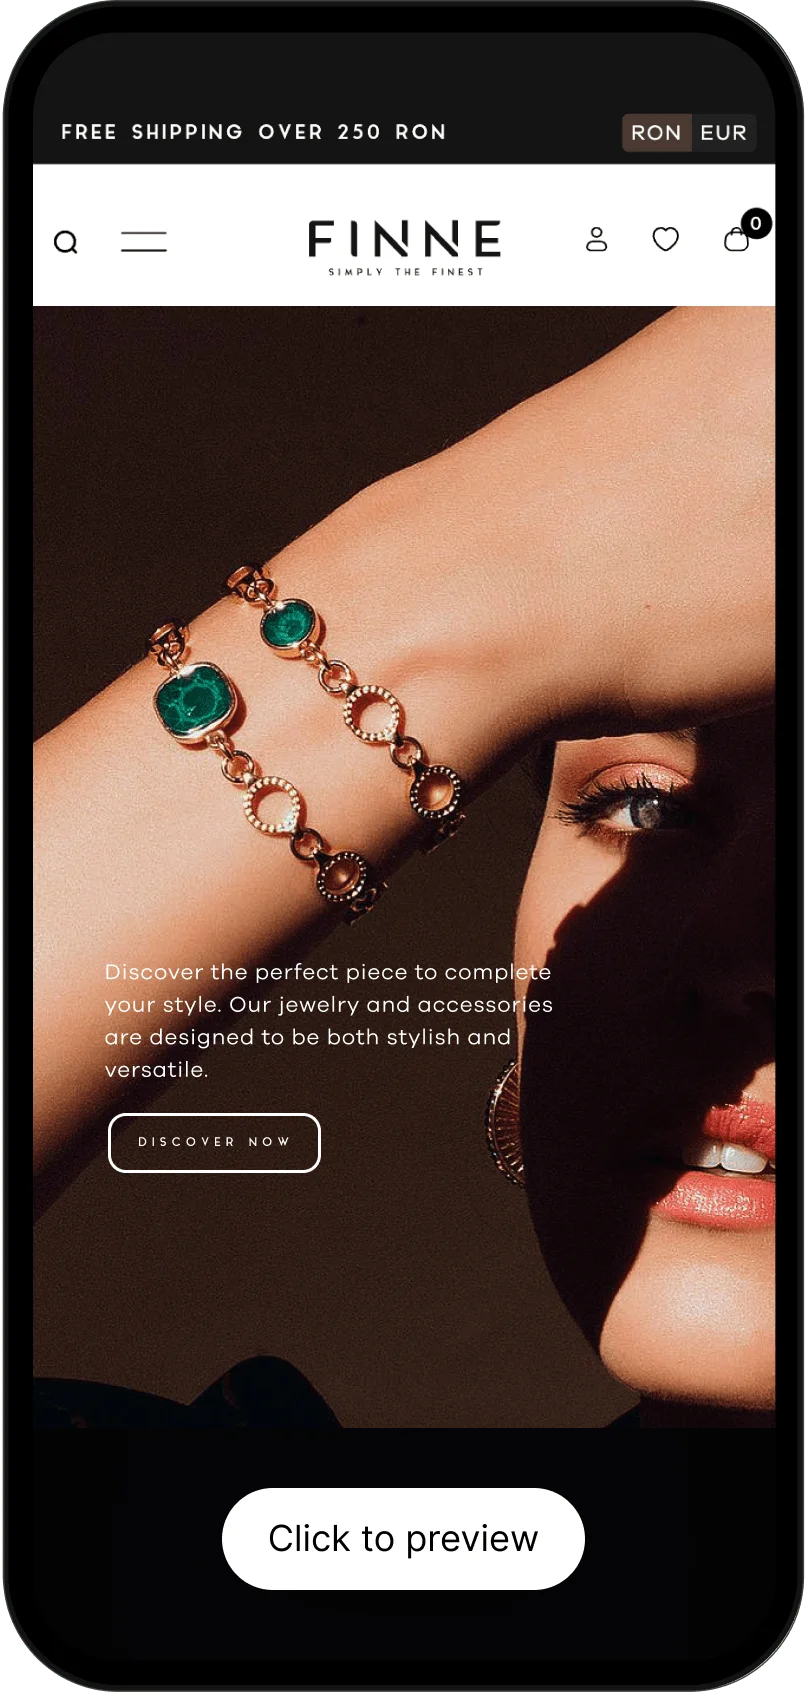 Finne jewelry website design